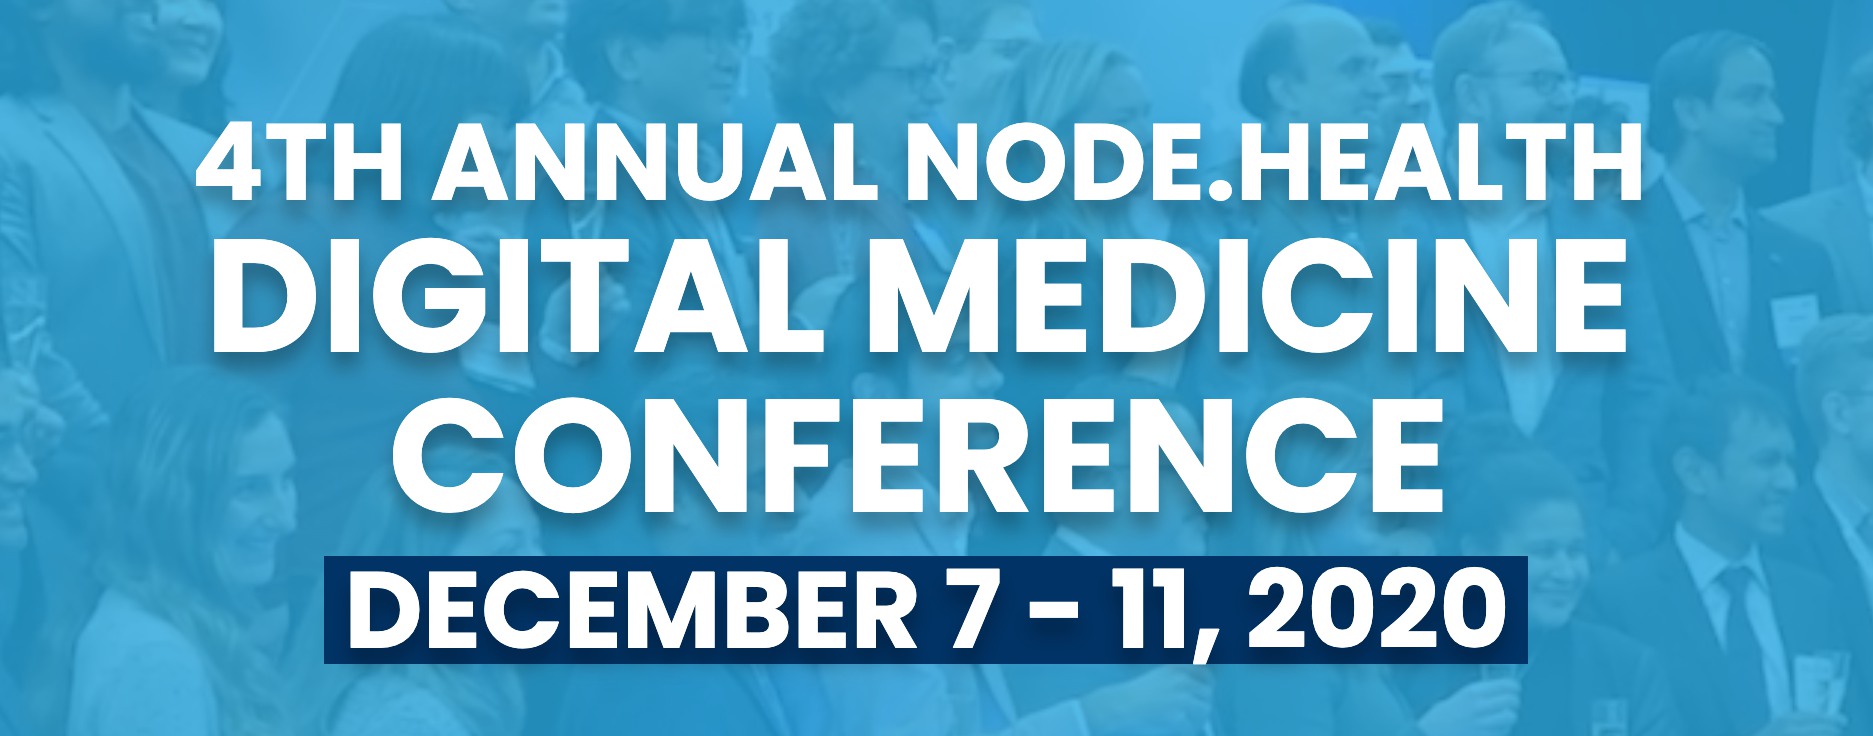 NODE.Health Digital Medicine Conference - Dec 7 to Dec 11